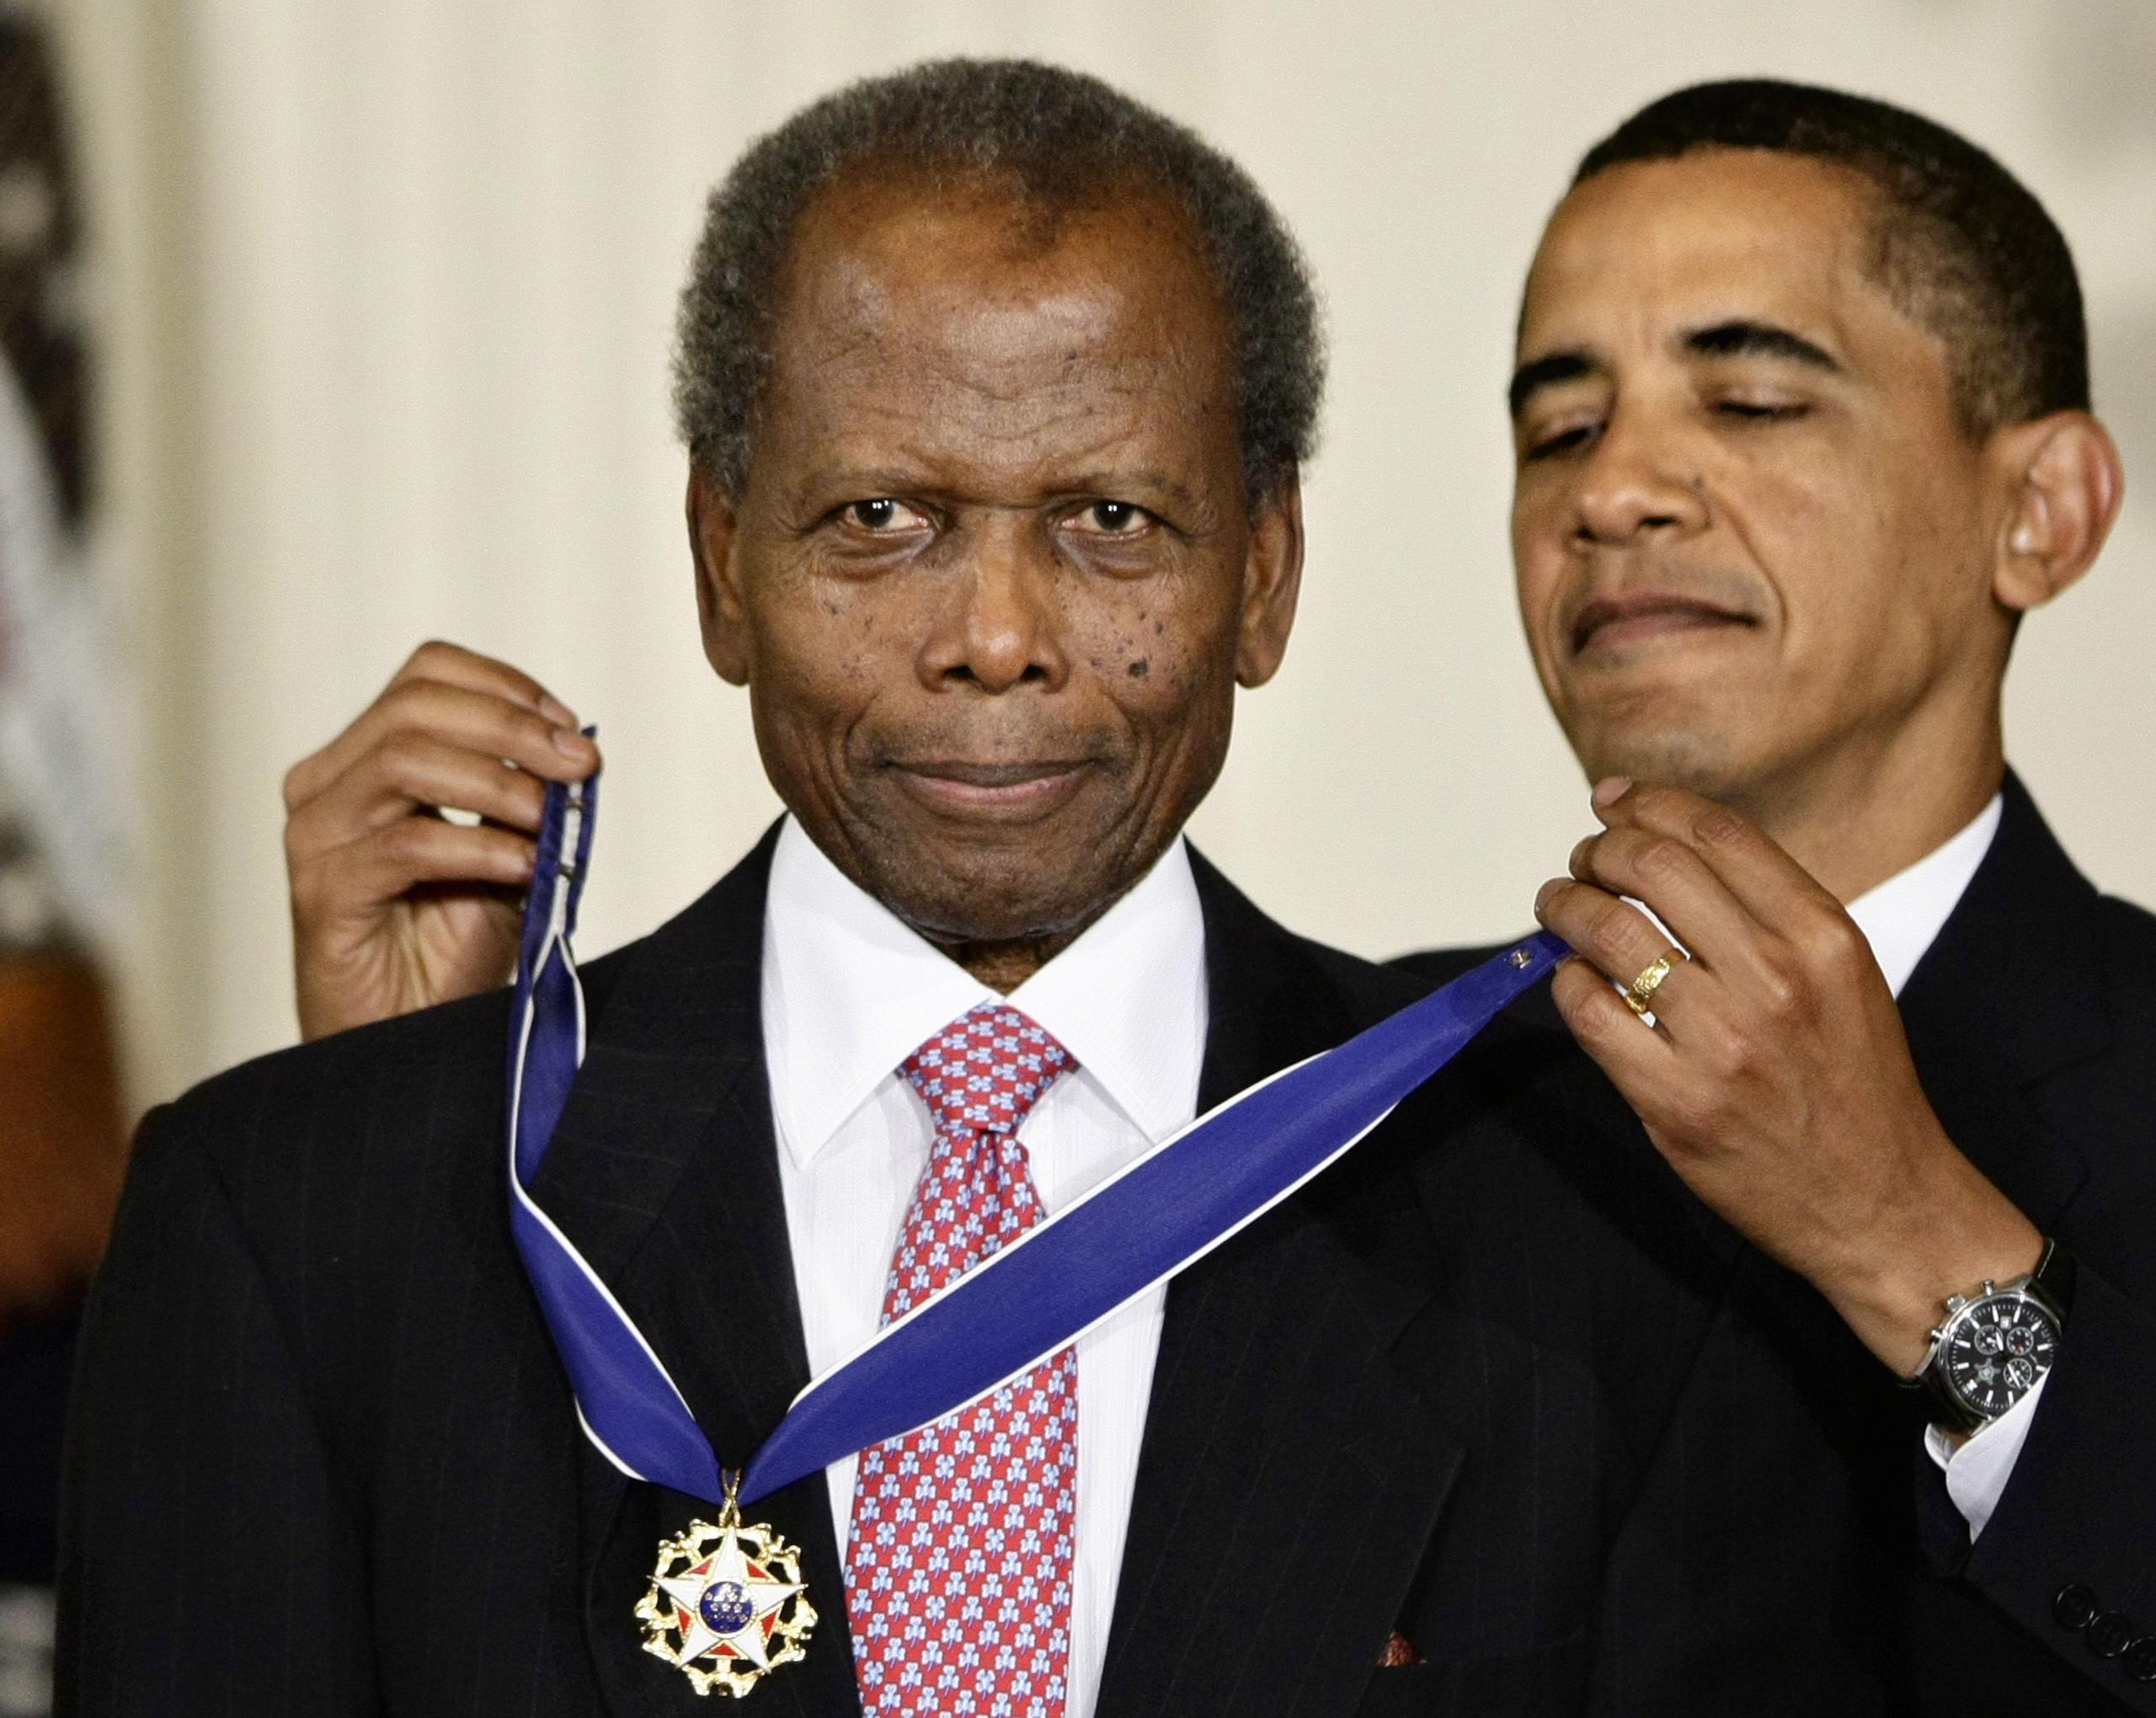 Barack Obama le coloca la Medalla presidencial de la libertad a Sidney Poitier en 2009. (AP Photo/J. Scott Applewhite, File)